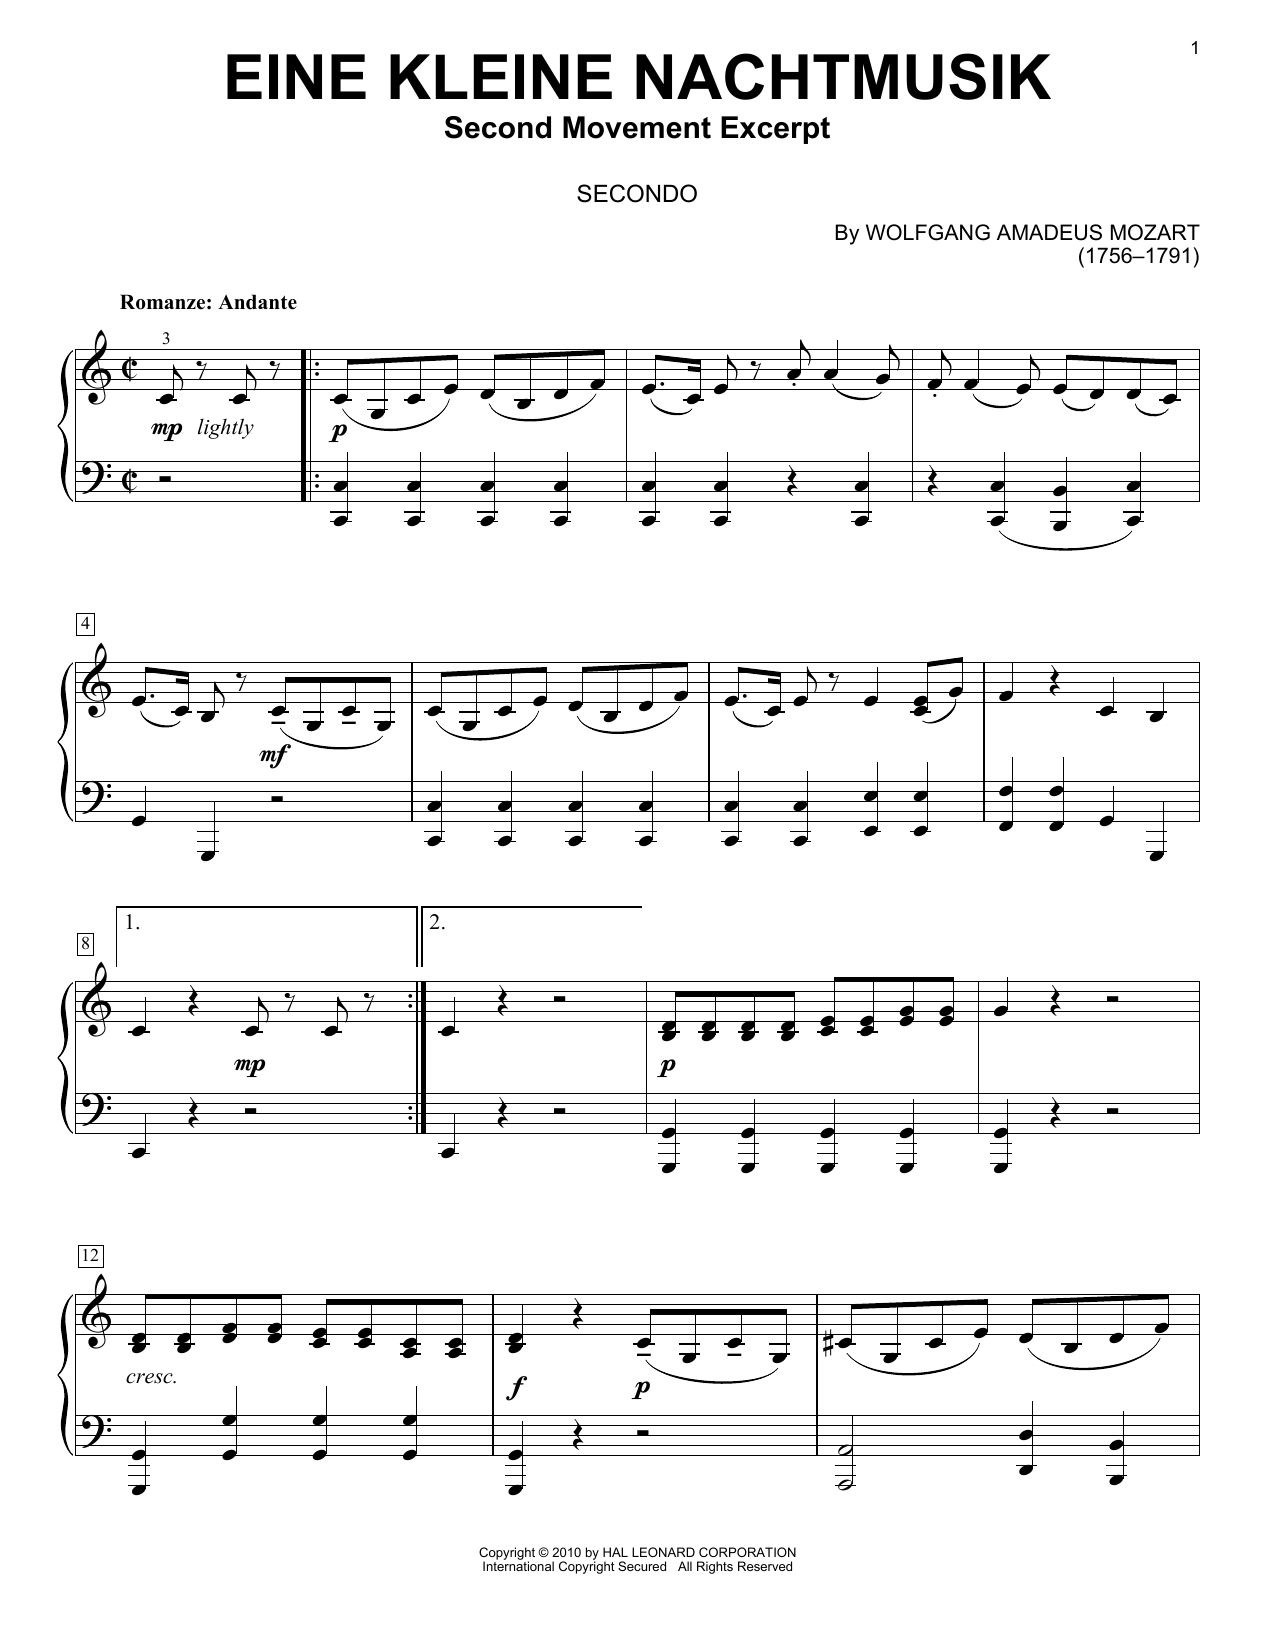 Wolfgang Amadeus Mozart Eine Kleine Nachtmusik Romance Second Movement Sheet Music Notes Chords Piano Download Classical Pdf